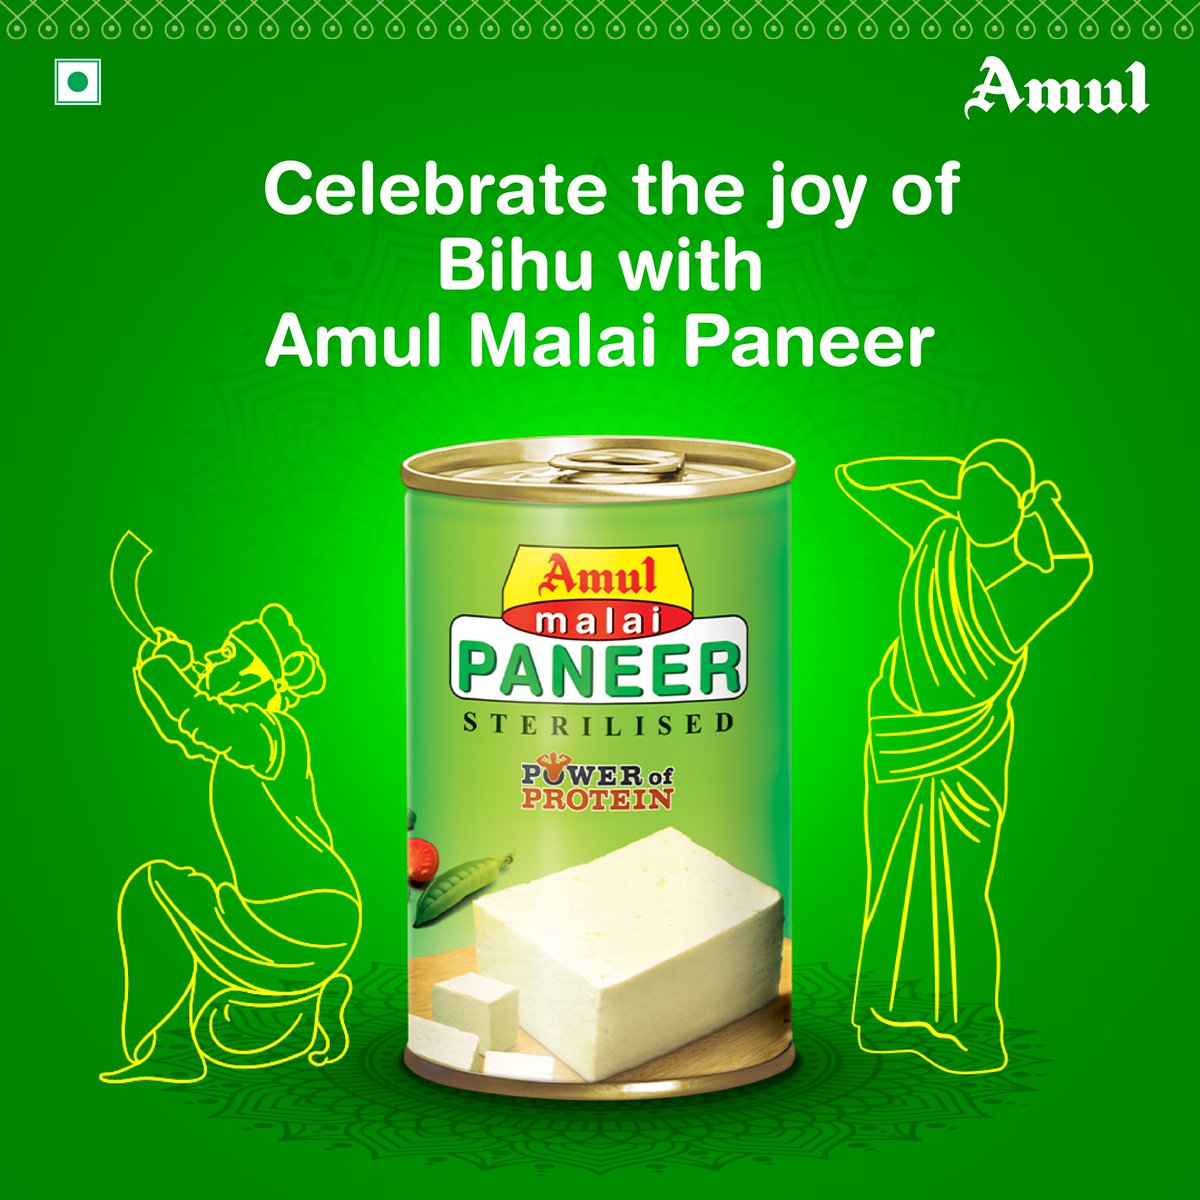 Celebrate Bihu with the creamy goodness of Amul Malai Paneer. #Amul #Bihu #AmulMalaiPaneer #Celebration #MalaiPaneer